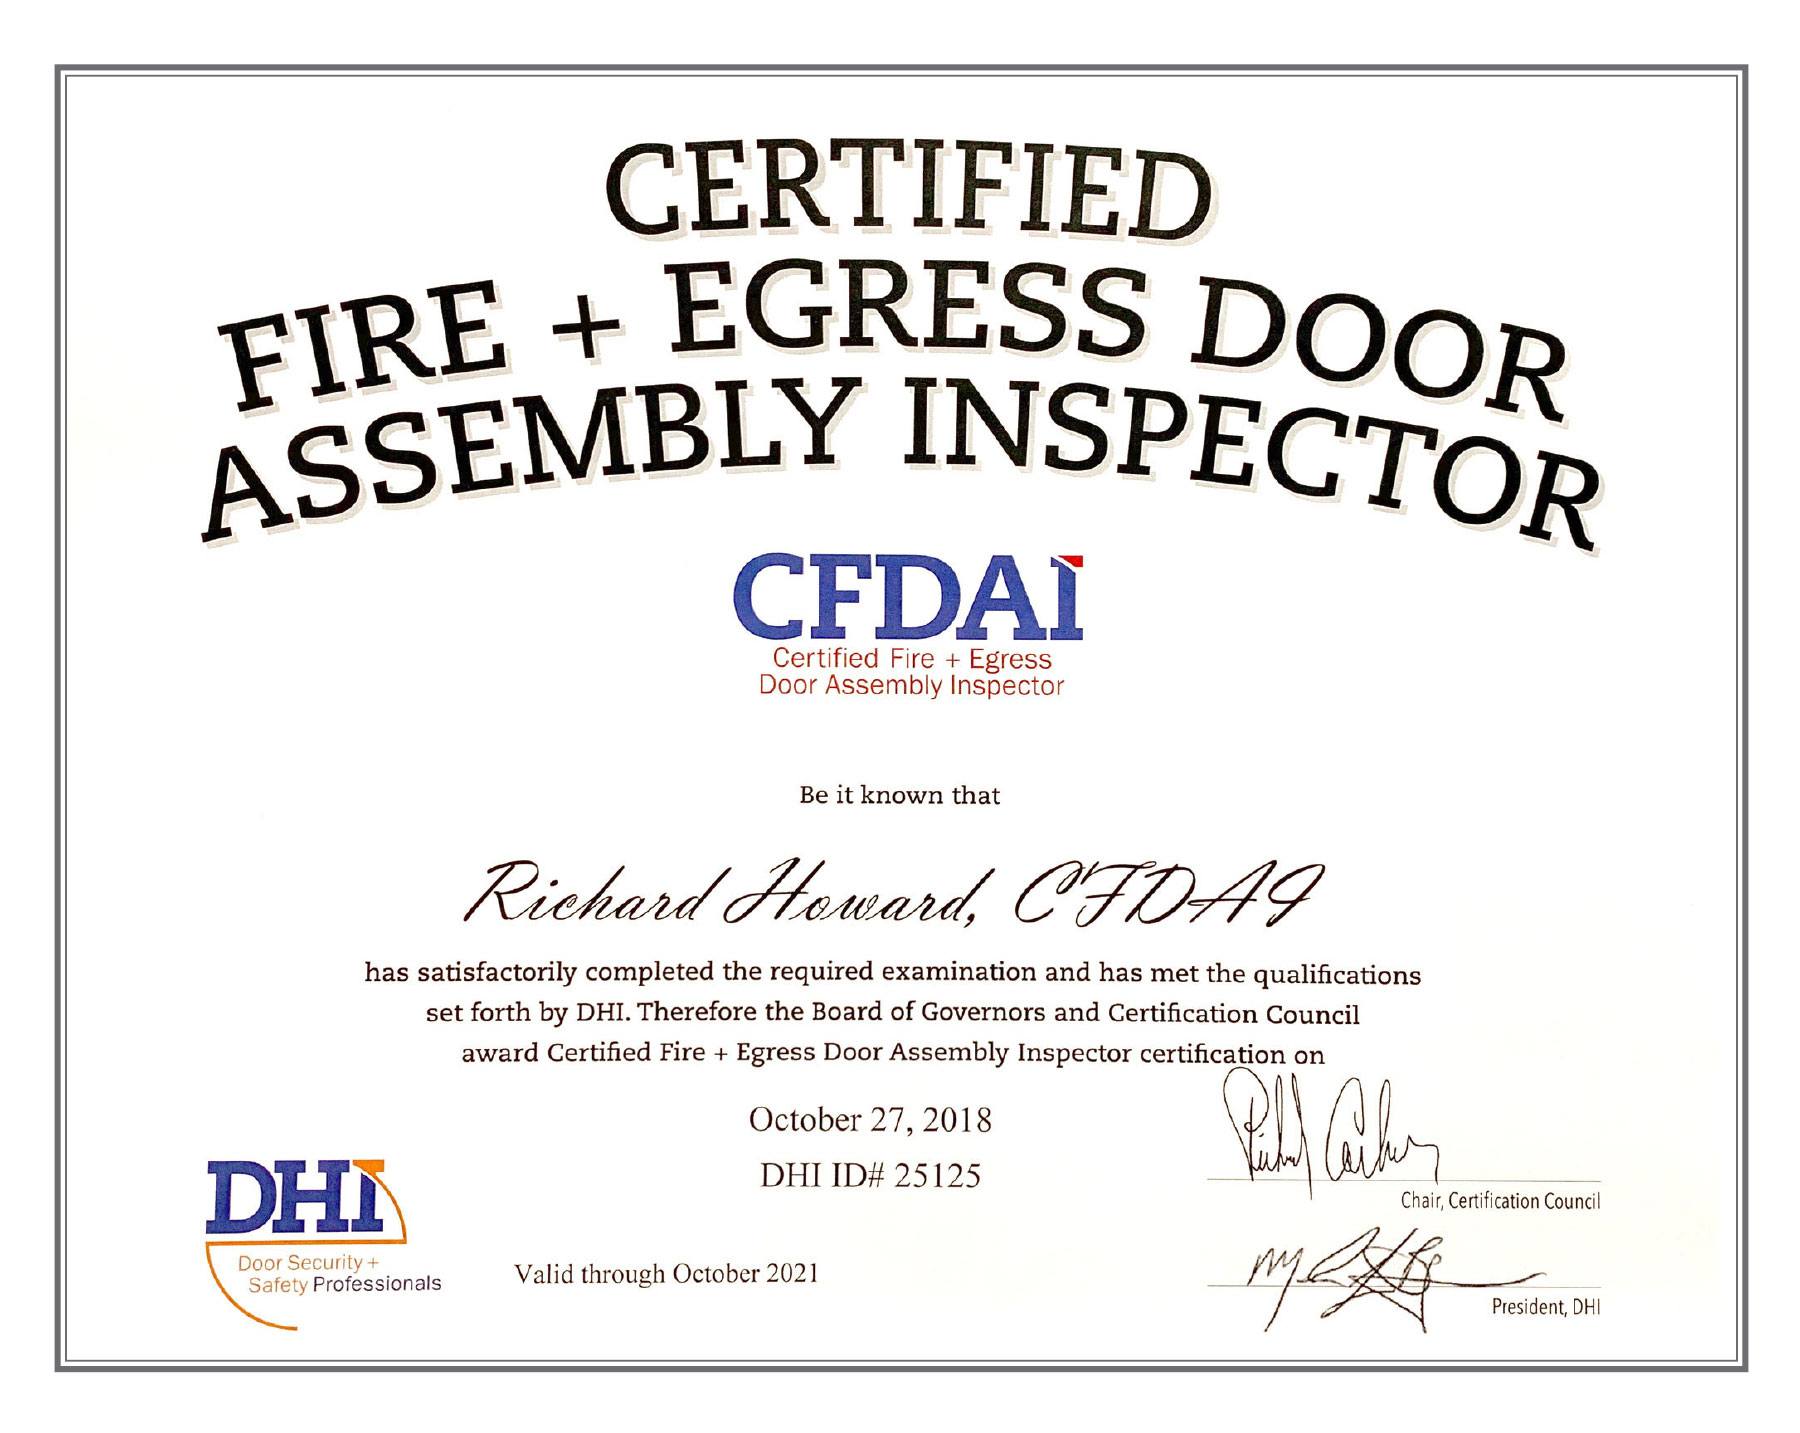 
Richard Howard Certified CFDAI